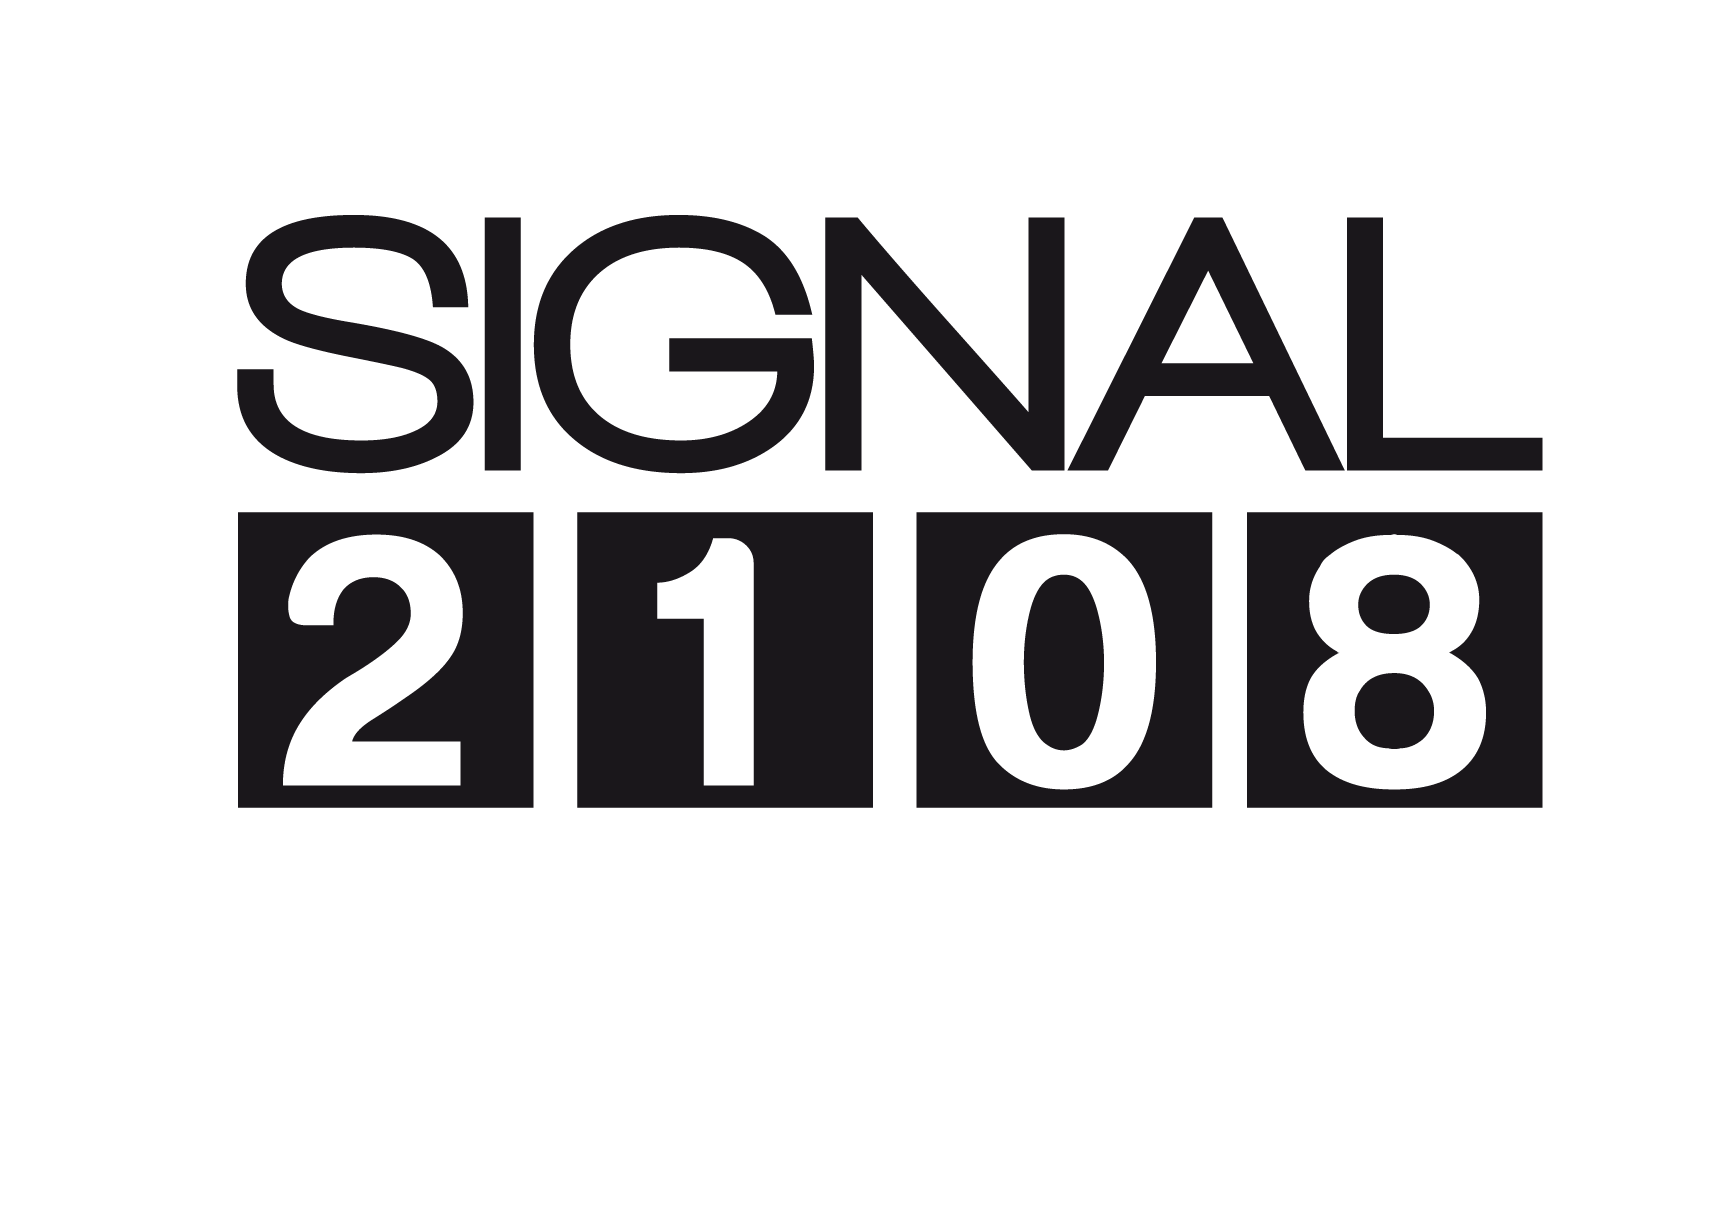 Signal 2108